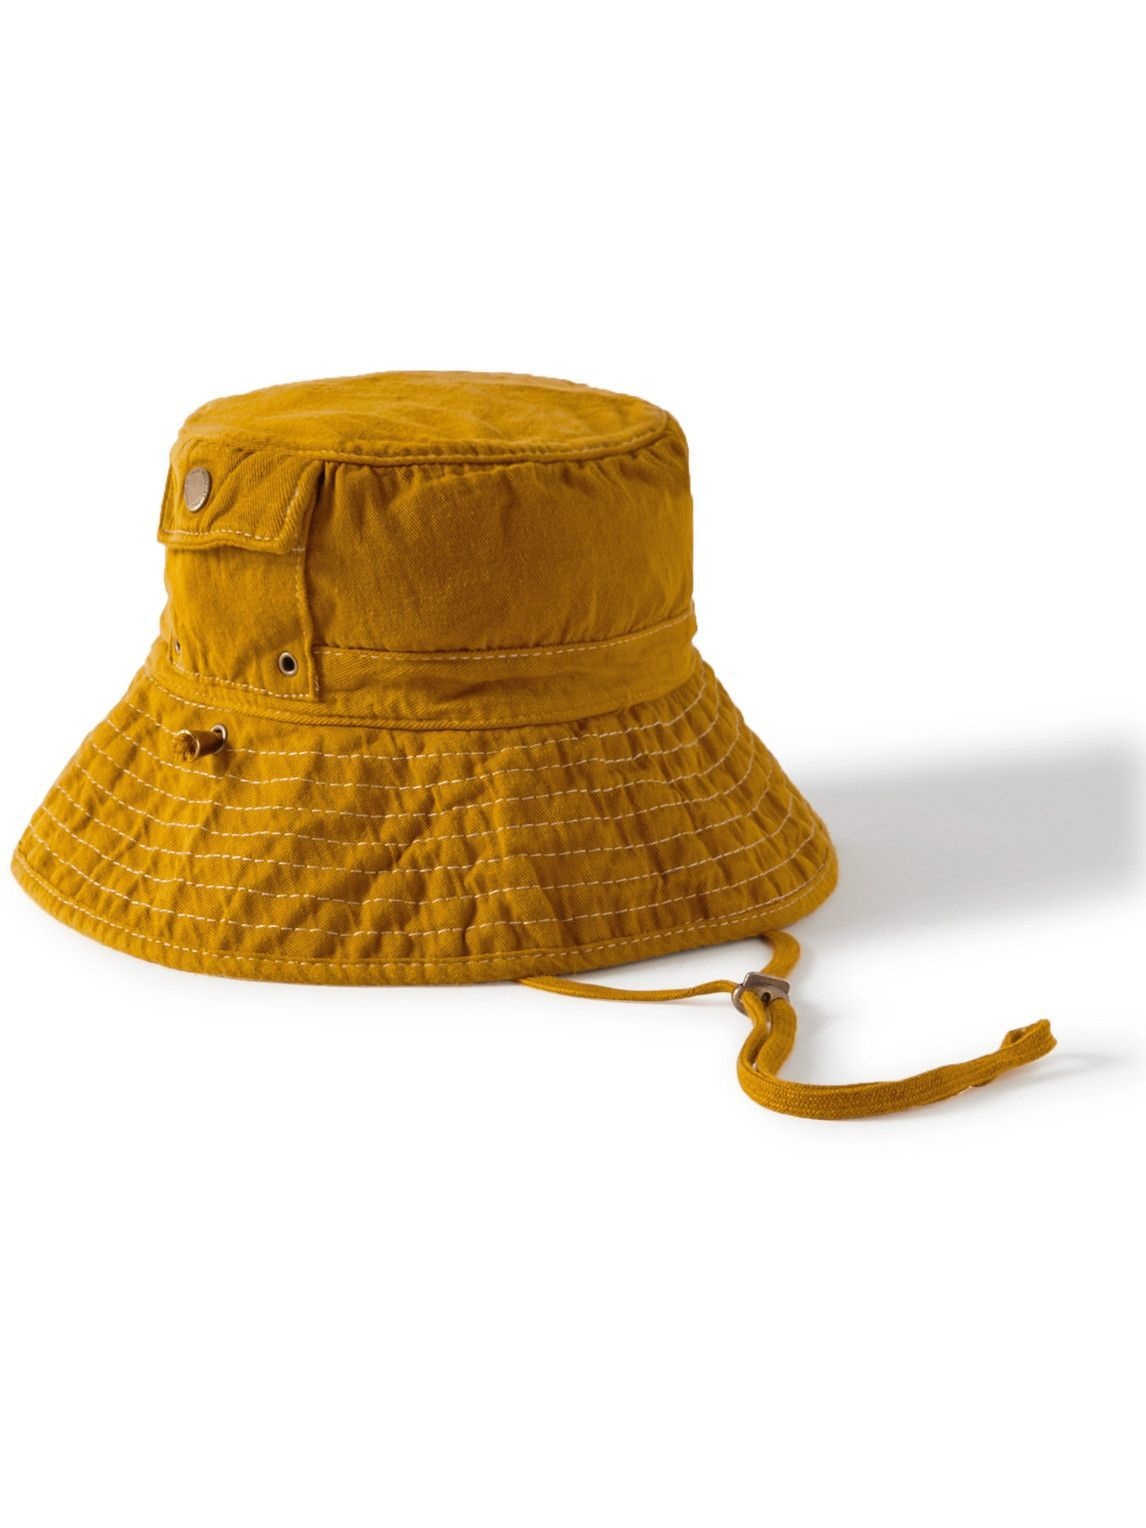 Nicholas Daley - Embroidered Cotton-Twill Bucket Hat Nicholas Daley